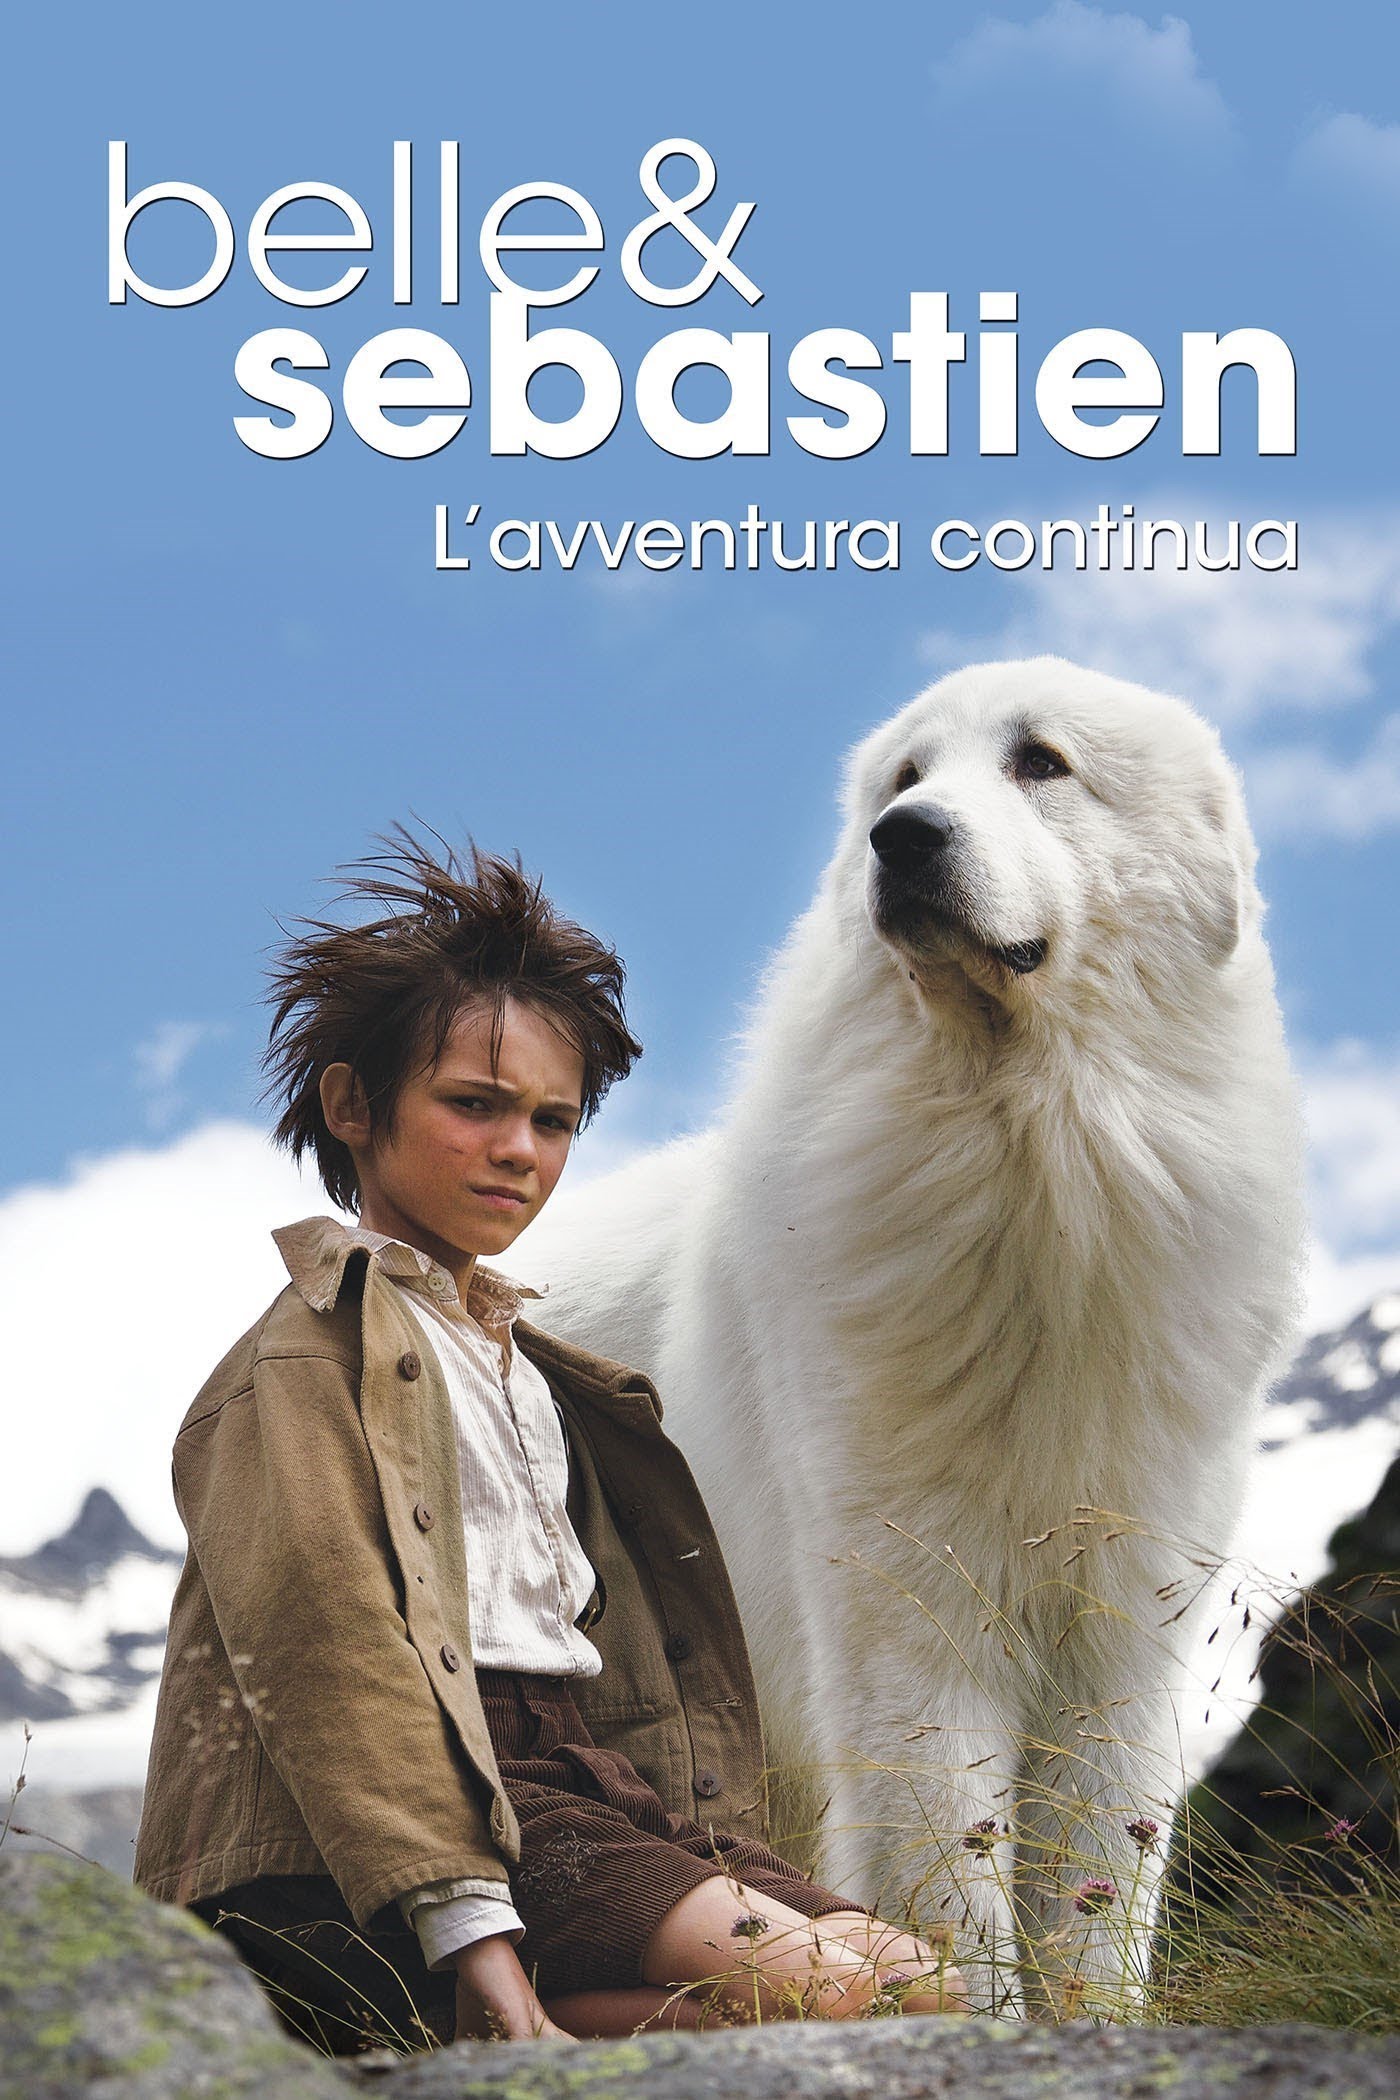 Belle & Sebastien – L’avventura continua [HD] (2015)